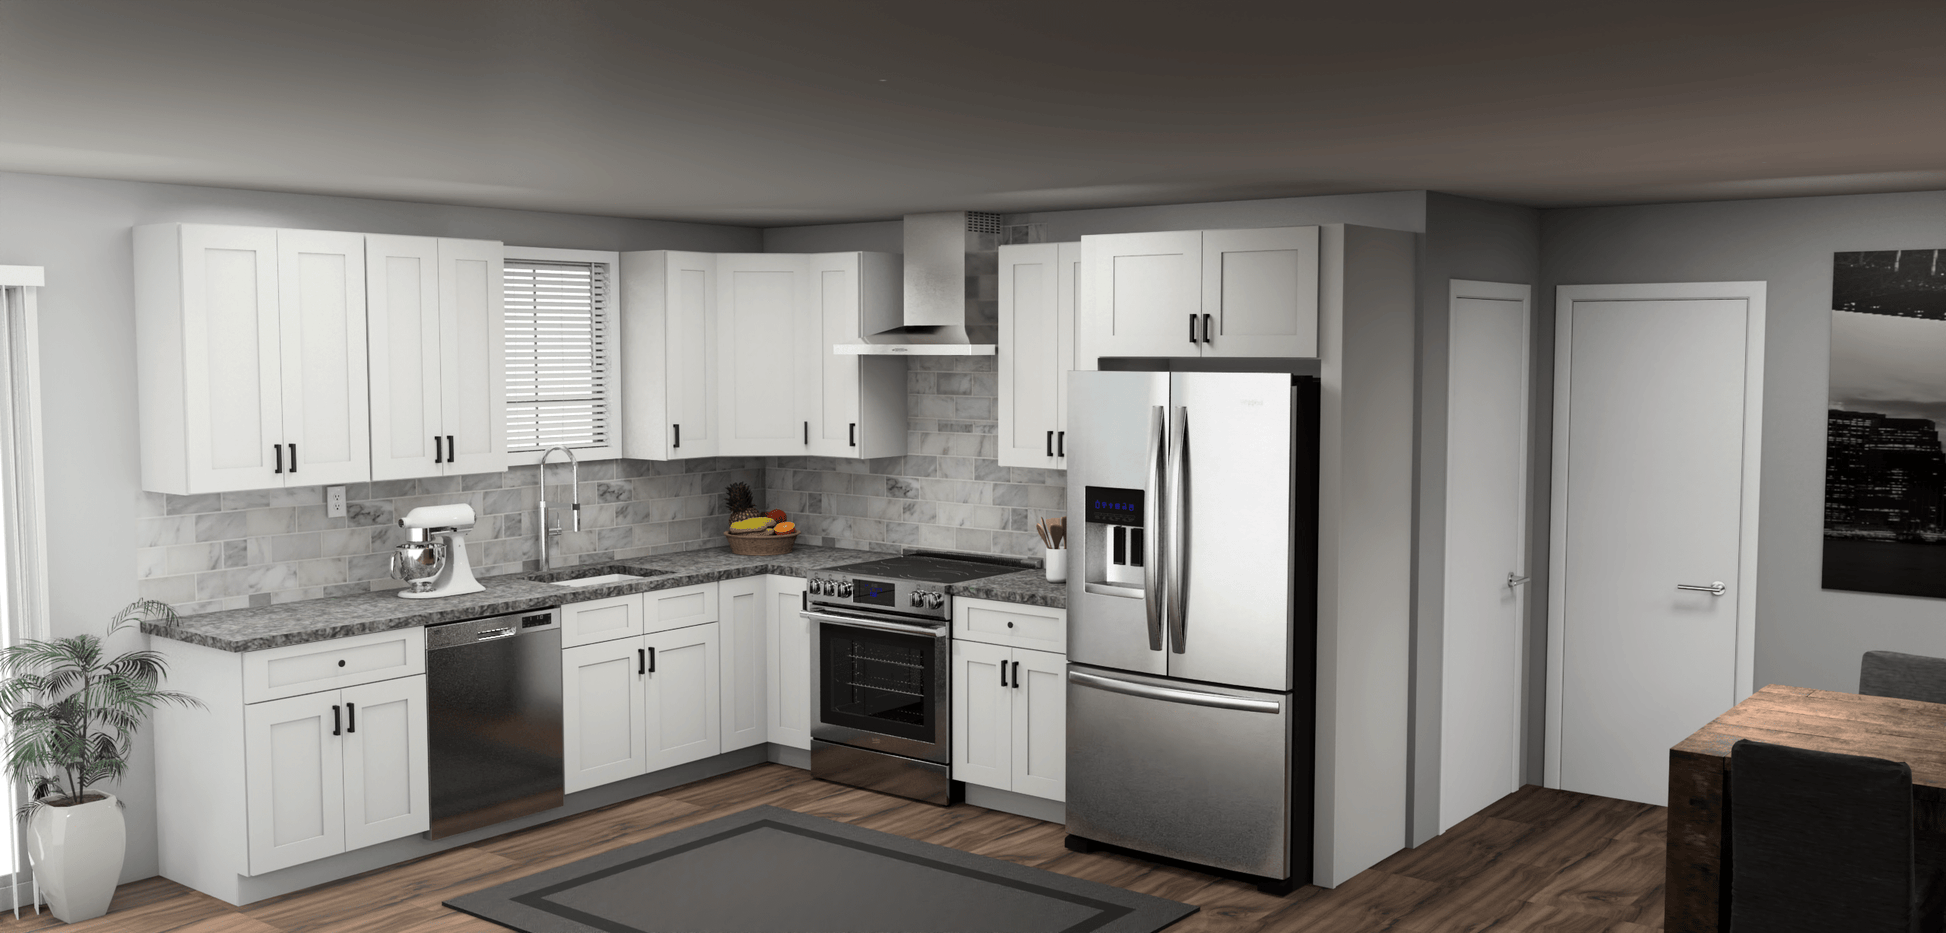 Fabuwood Allure Galaxy Frost 10 x 11 L Shaped Kitchen Main Layout Photo